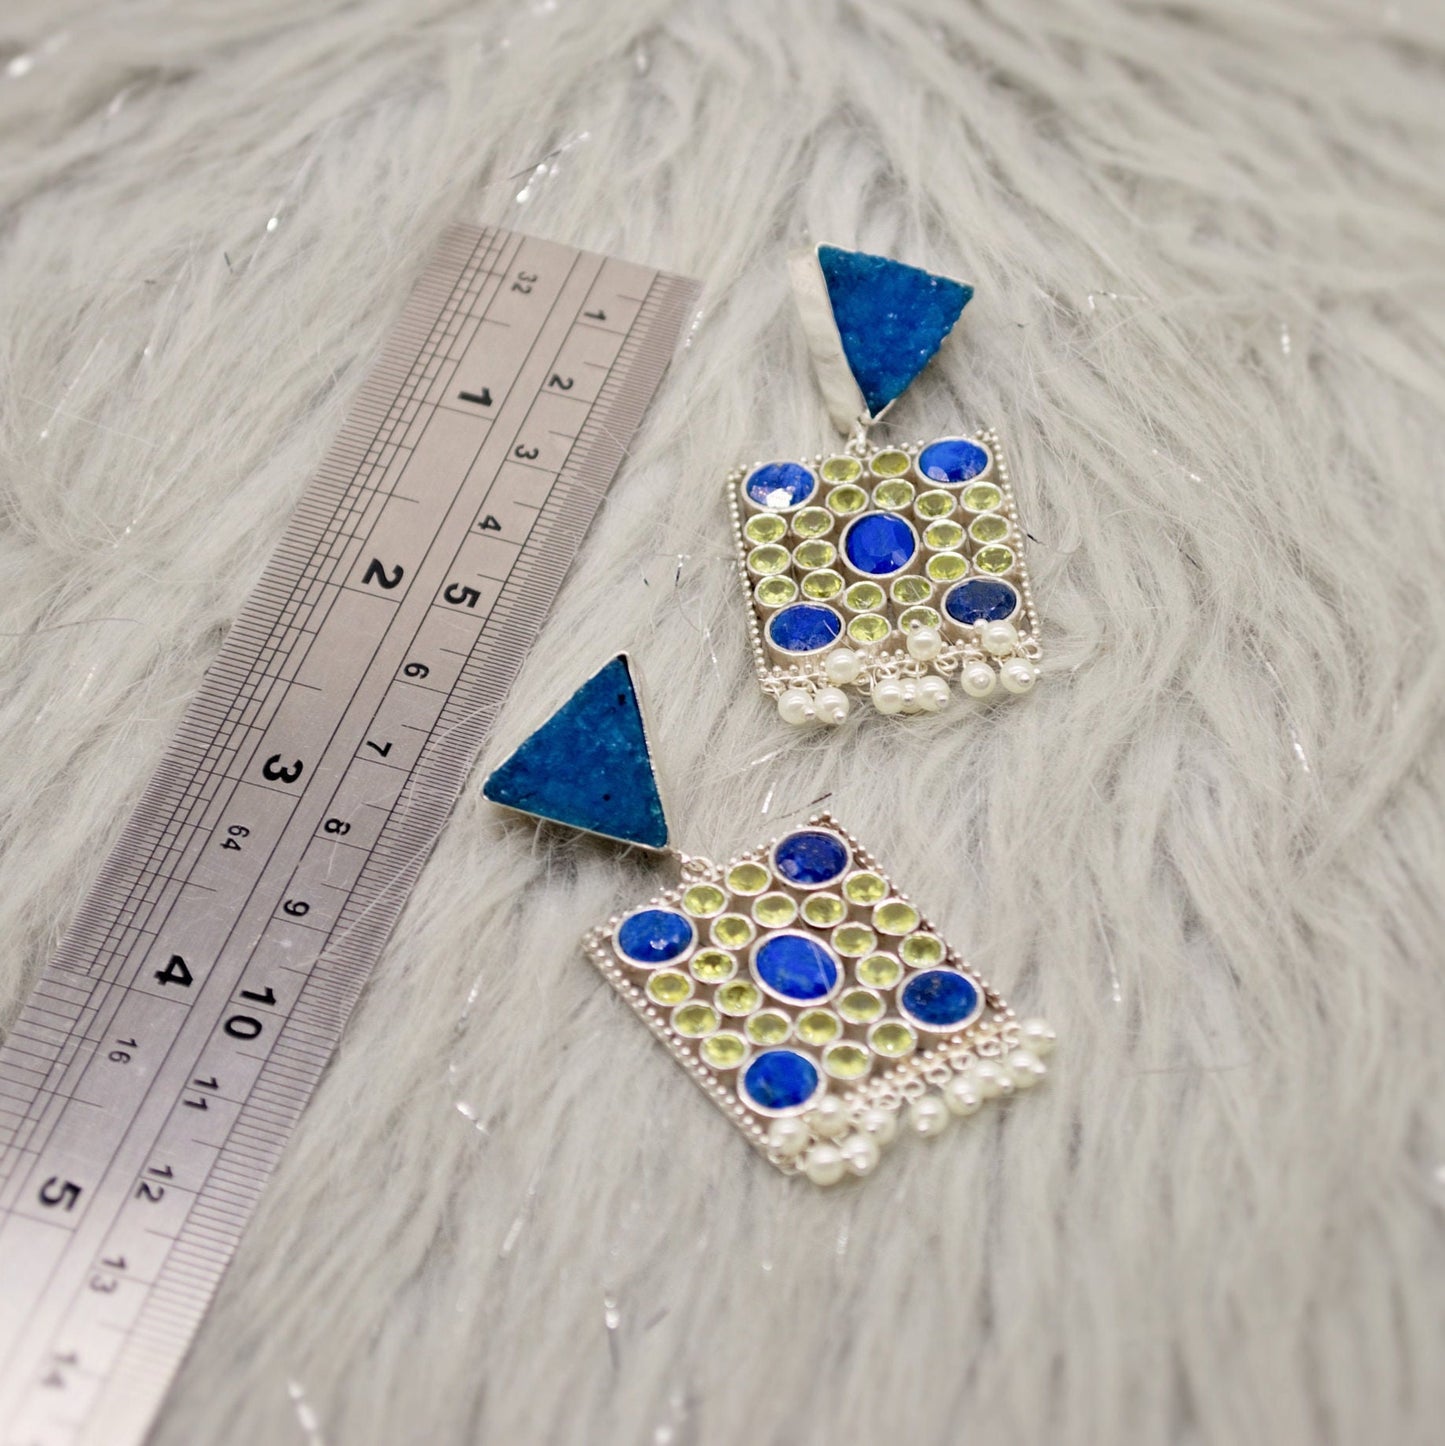 Blue Agate, Lapis, Peridot Silver Earrings, Lapis Lazuli Earrings, August, December Birthstone, Unique Statement Earrings, Gift For Her